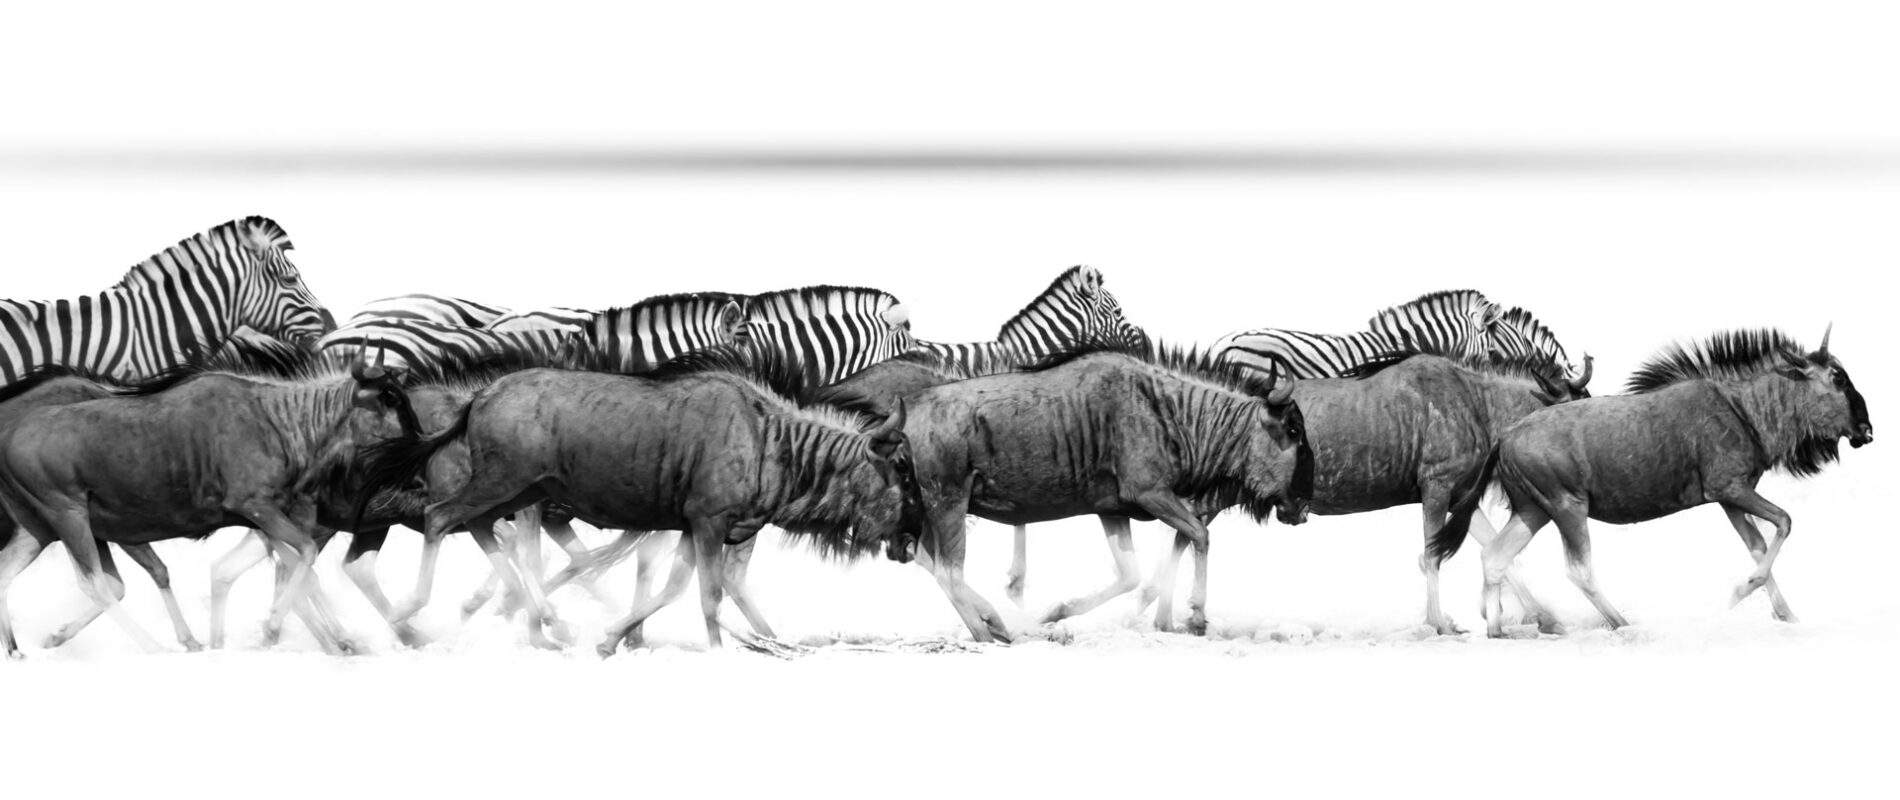 wildebeest and zebras